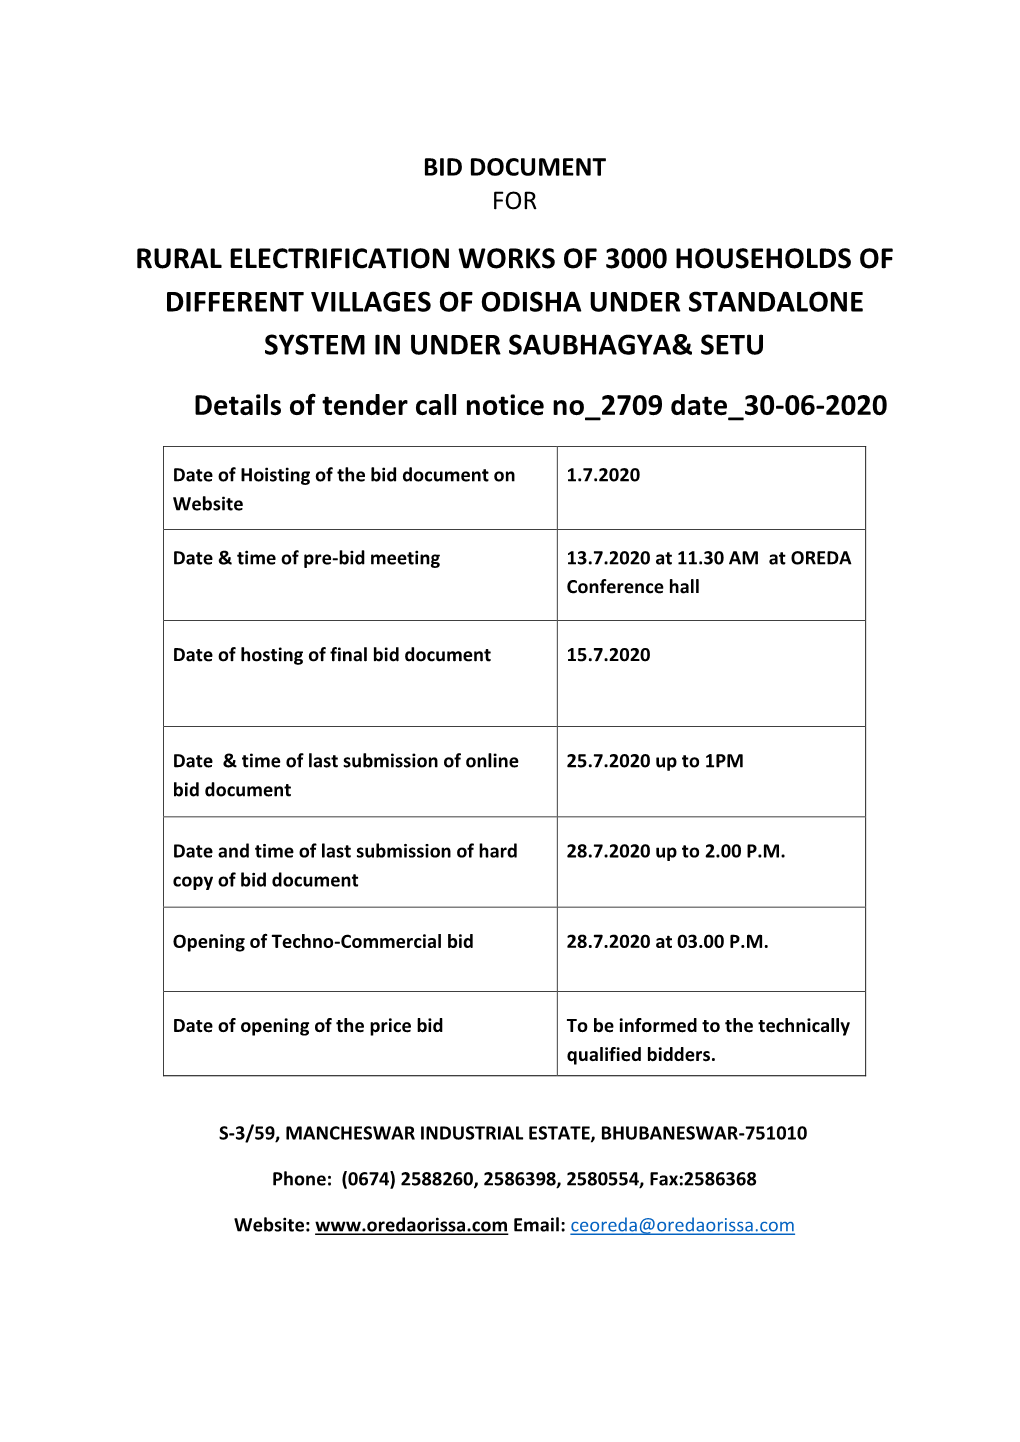 Rural Electrification Works of 3000 Households of Different Villages of Odisha Under Standalone System in Under Saubhagya& Setu